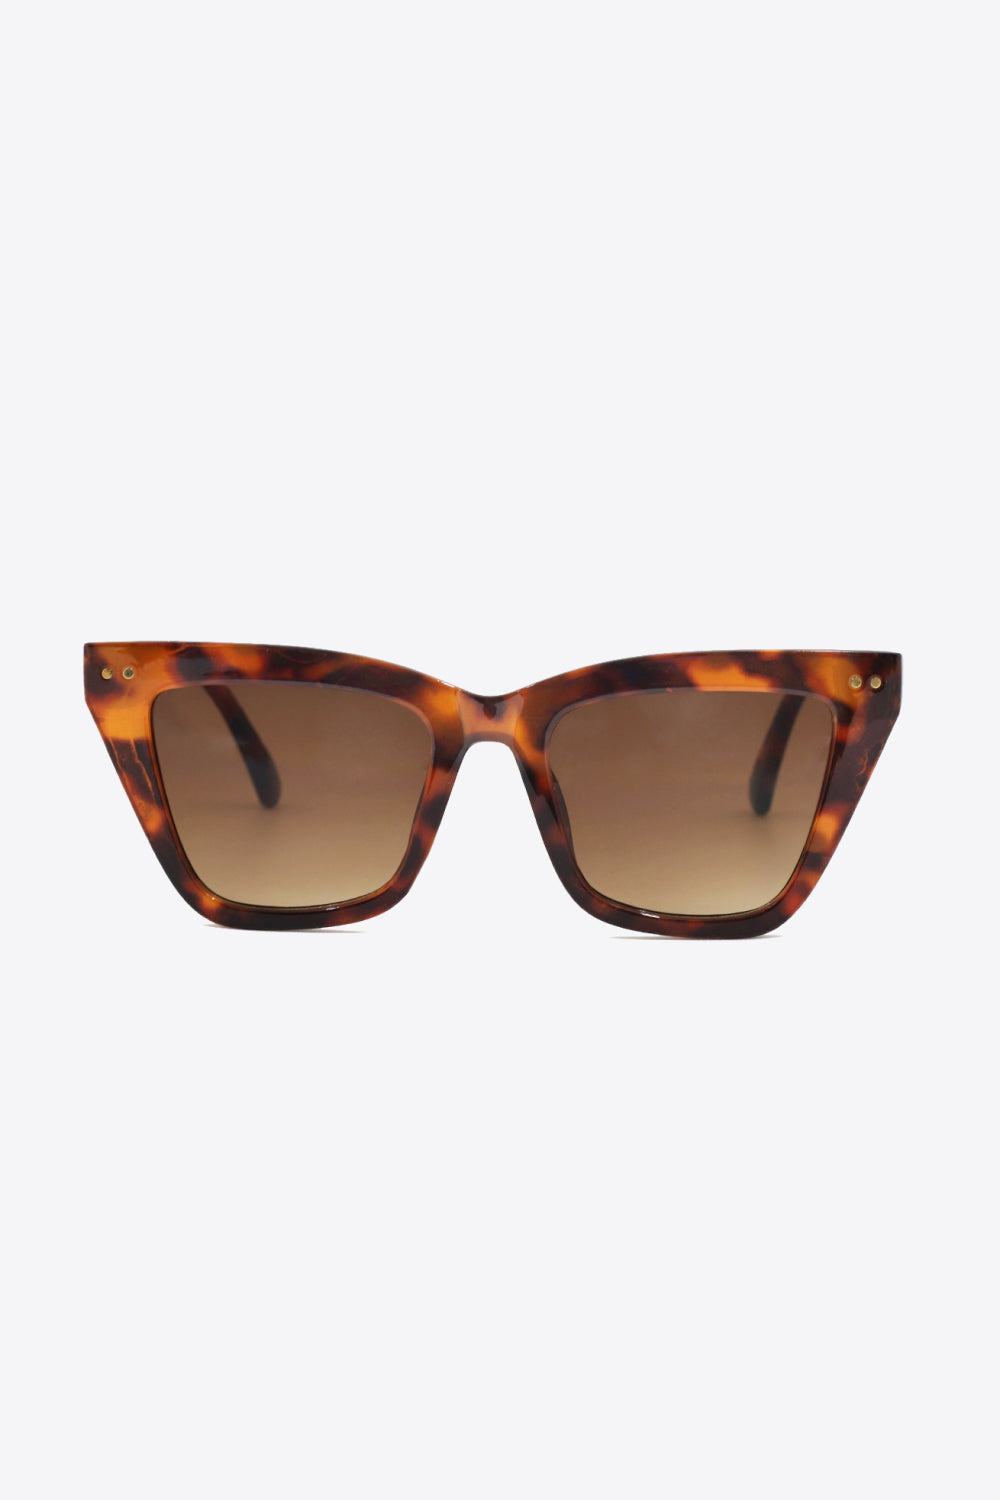 White Smoke UV400 Polycarbonate Frame Sunglasses Sentient Beauty Fashions Apparel &amp; Accessories